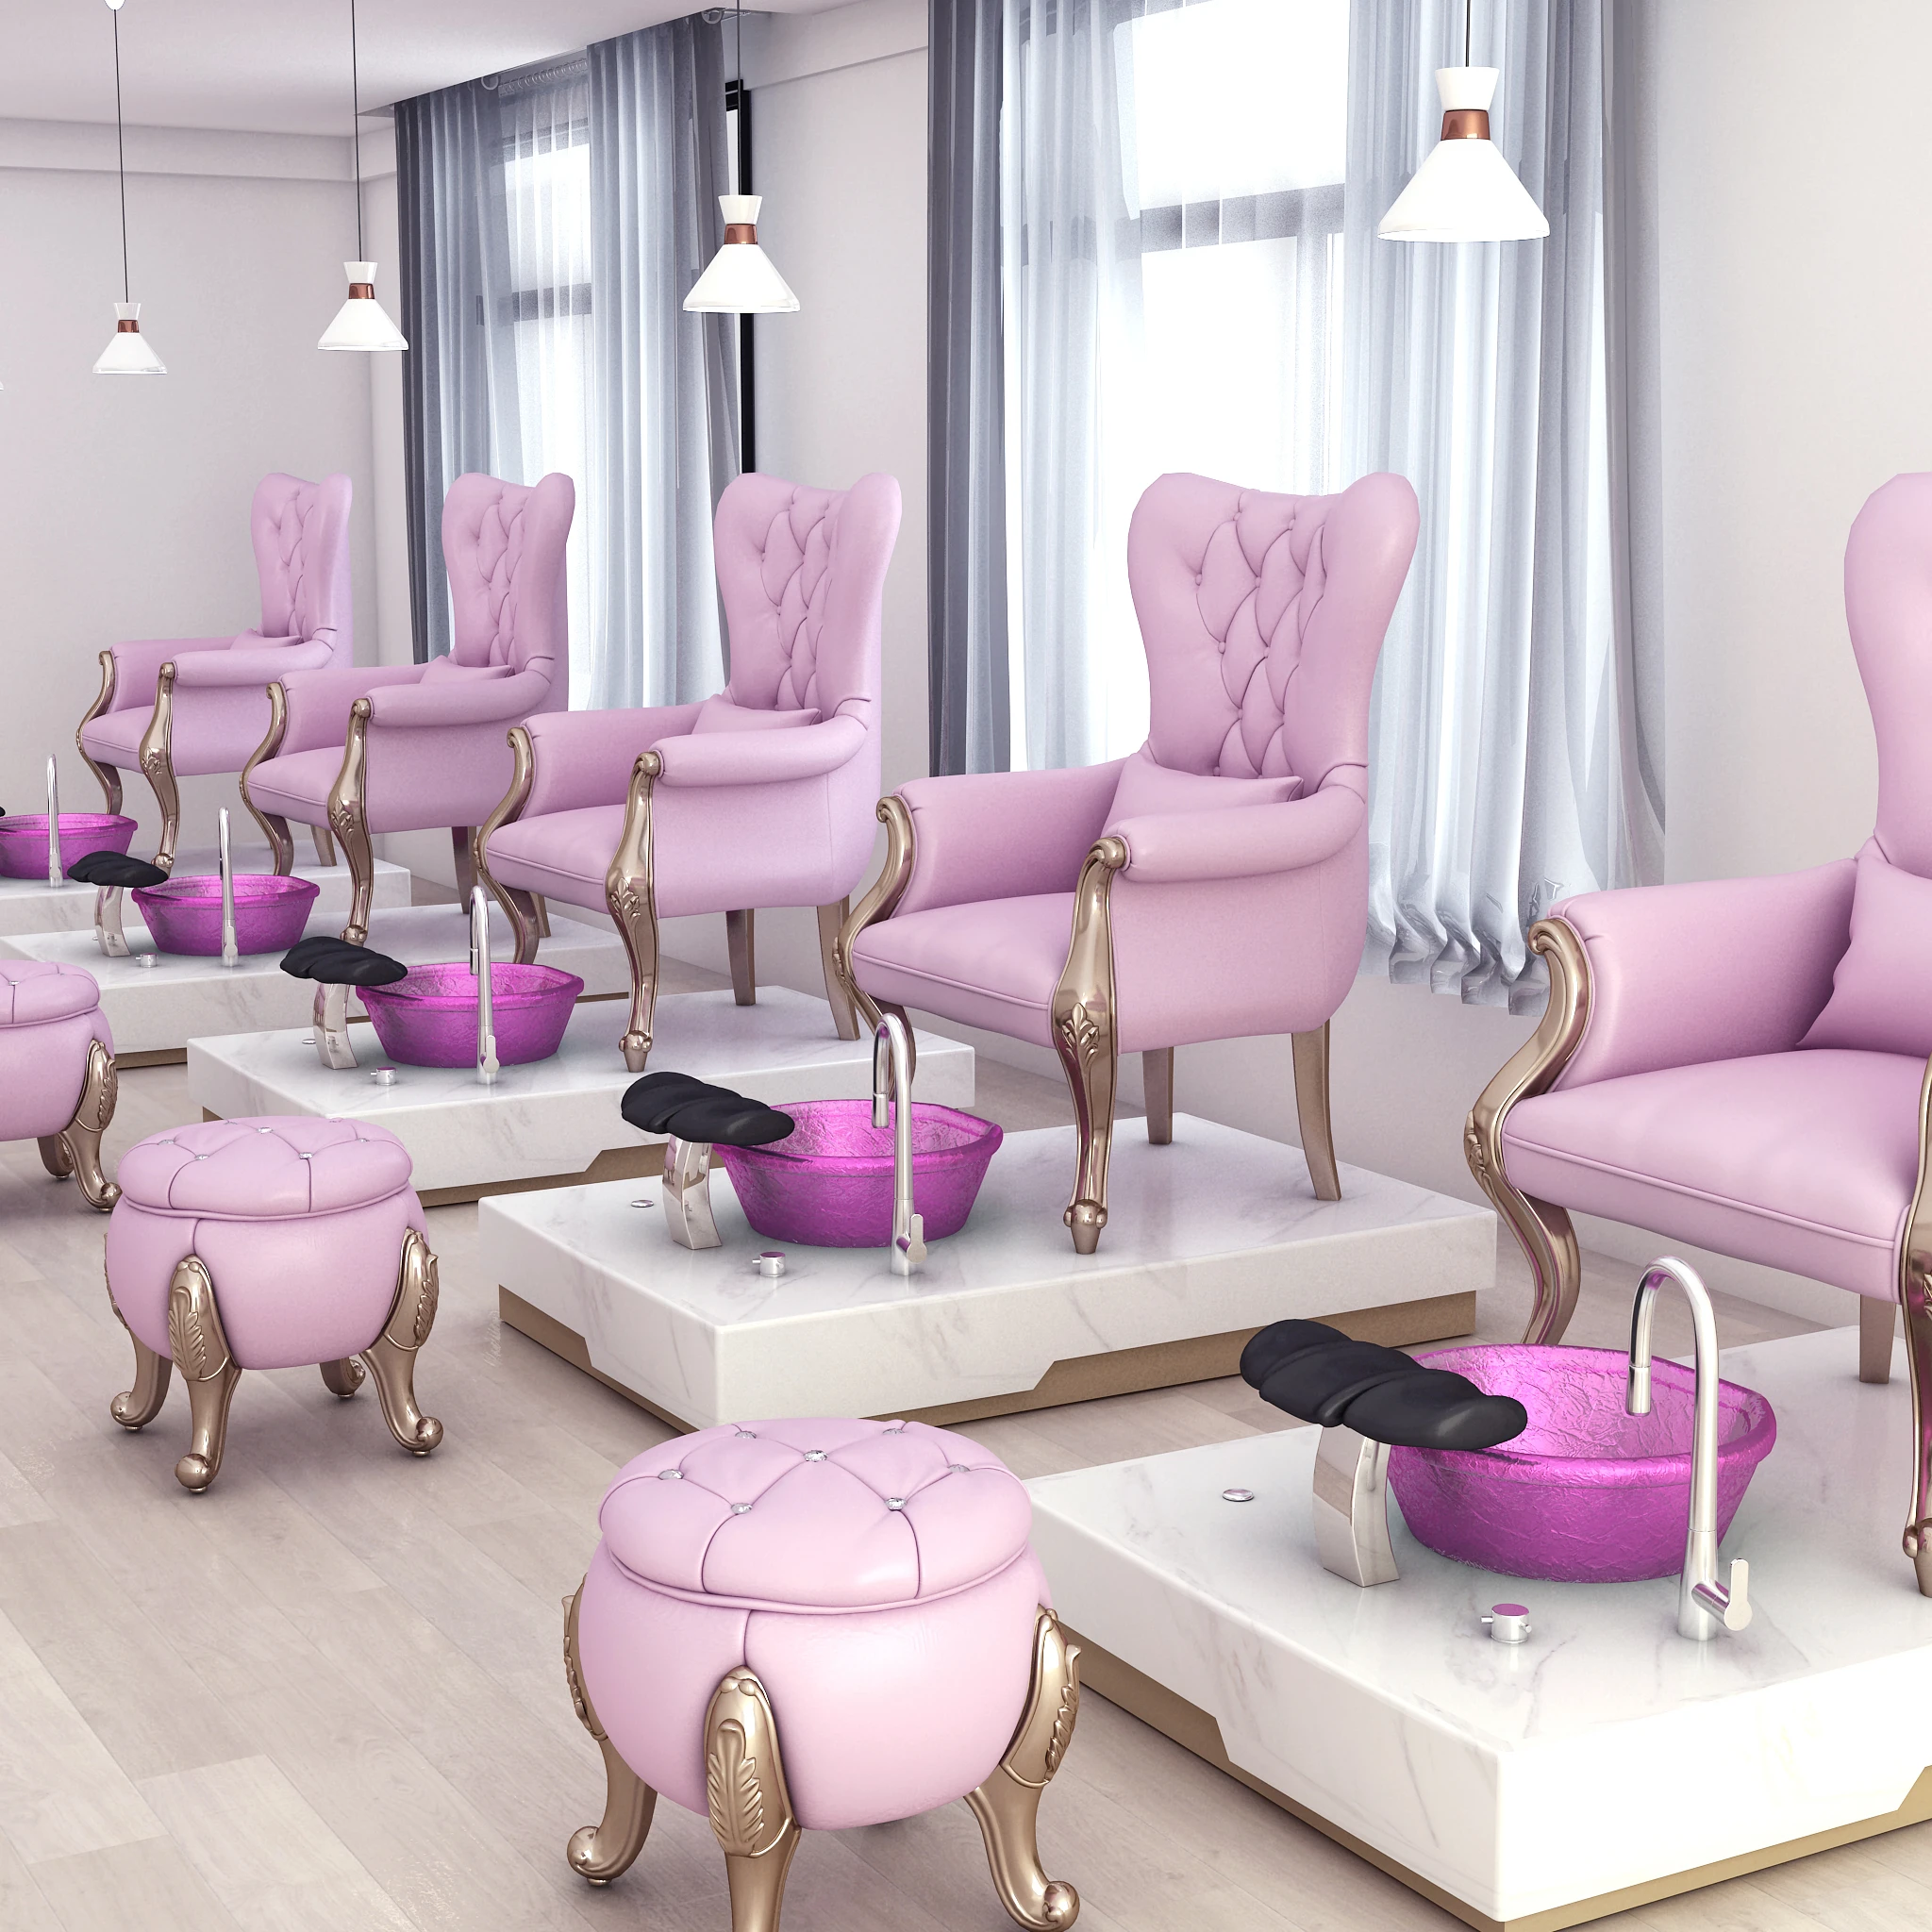 
Ultra luxury nails table salon manicure table salon furniture 